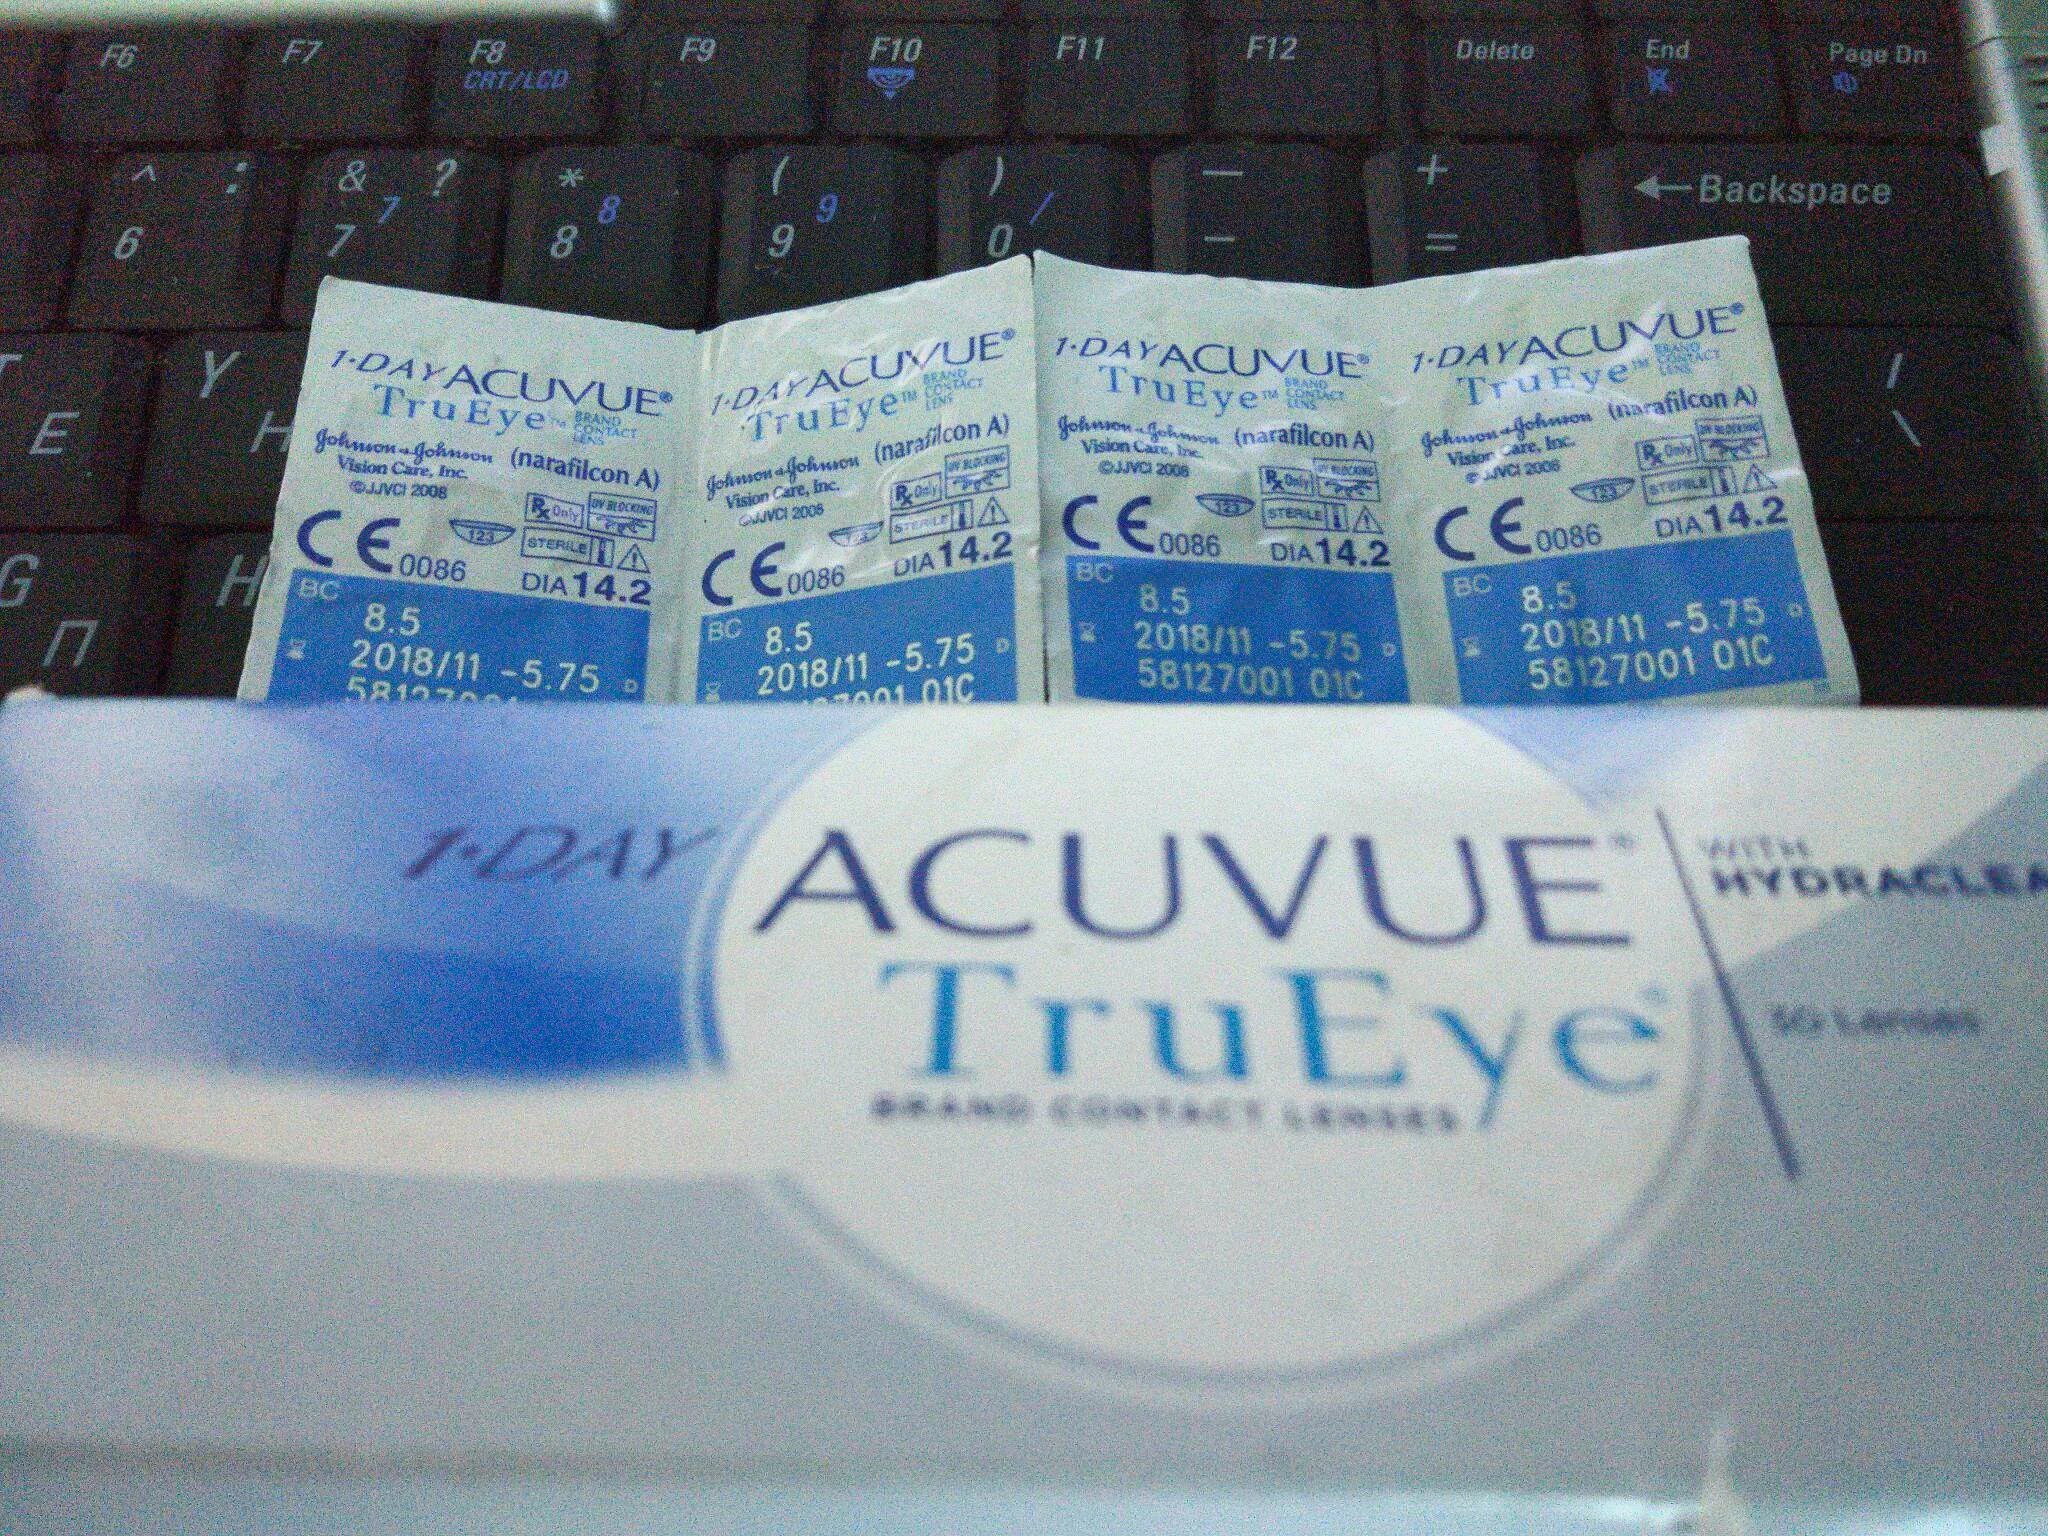 Acuvue true. 1-Day Acuvue TRUEYE (30 линз). Acuvue TRUEYE (30 линз). Линзы Acuvue true Eye 1 Day 30 шт. 1 Day Acuvue TRUEYE контактные линзы Acuvue TRUEYE 1.